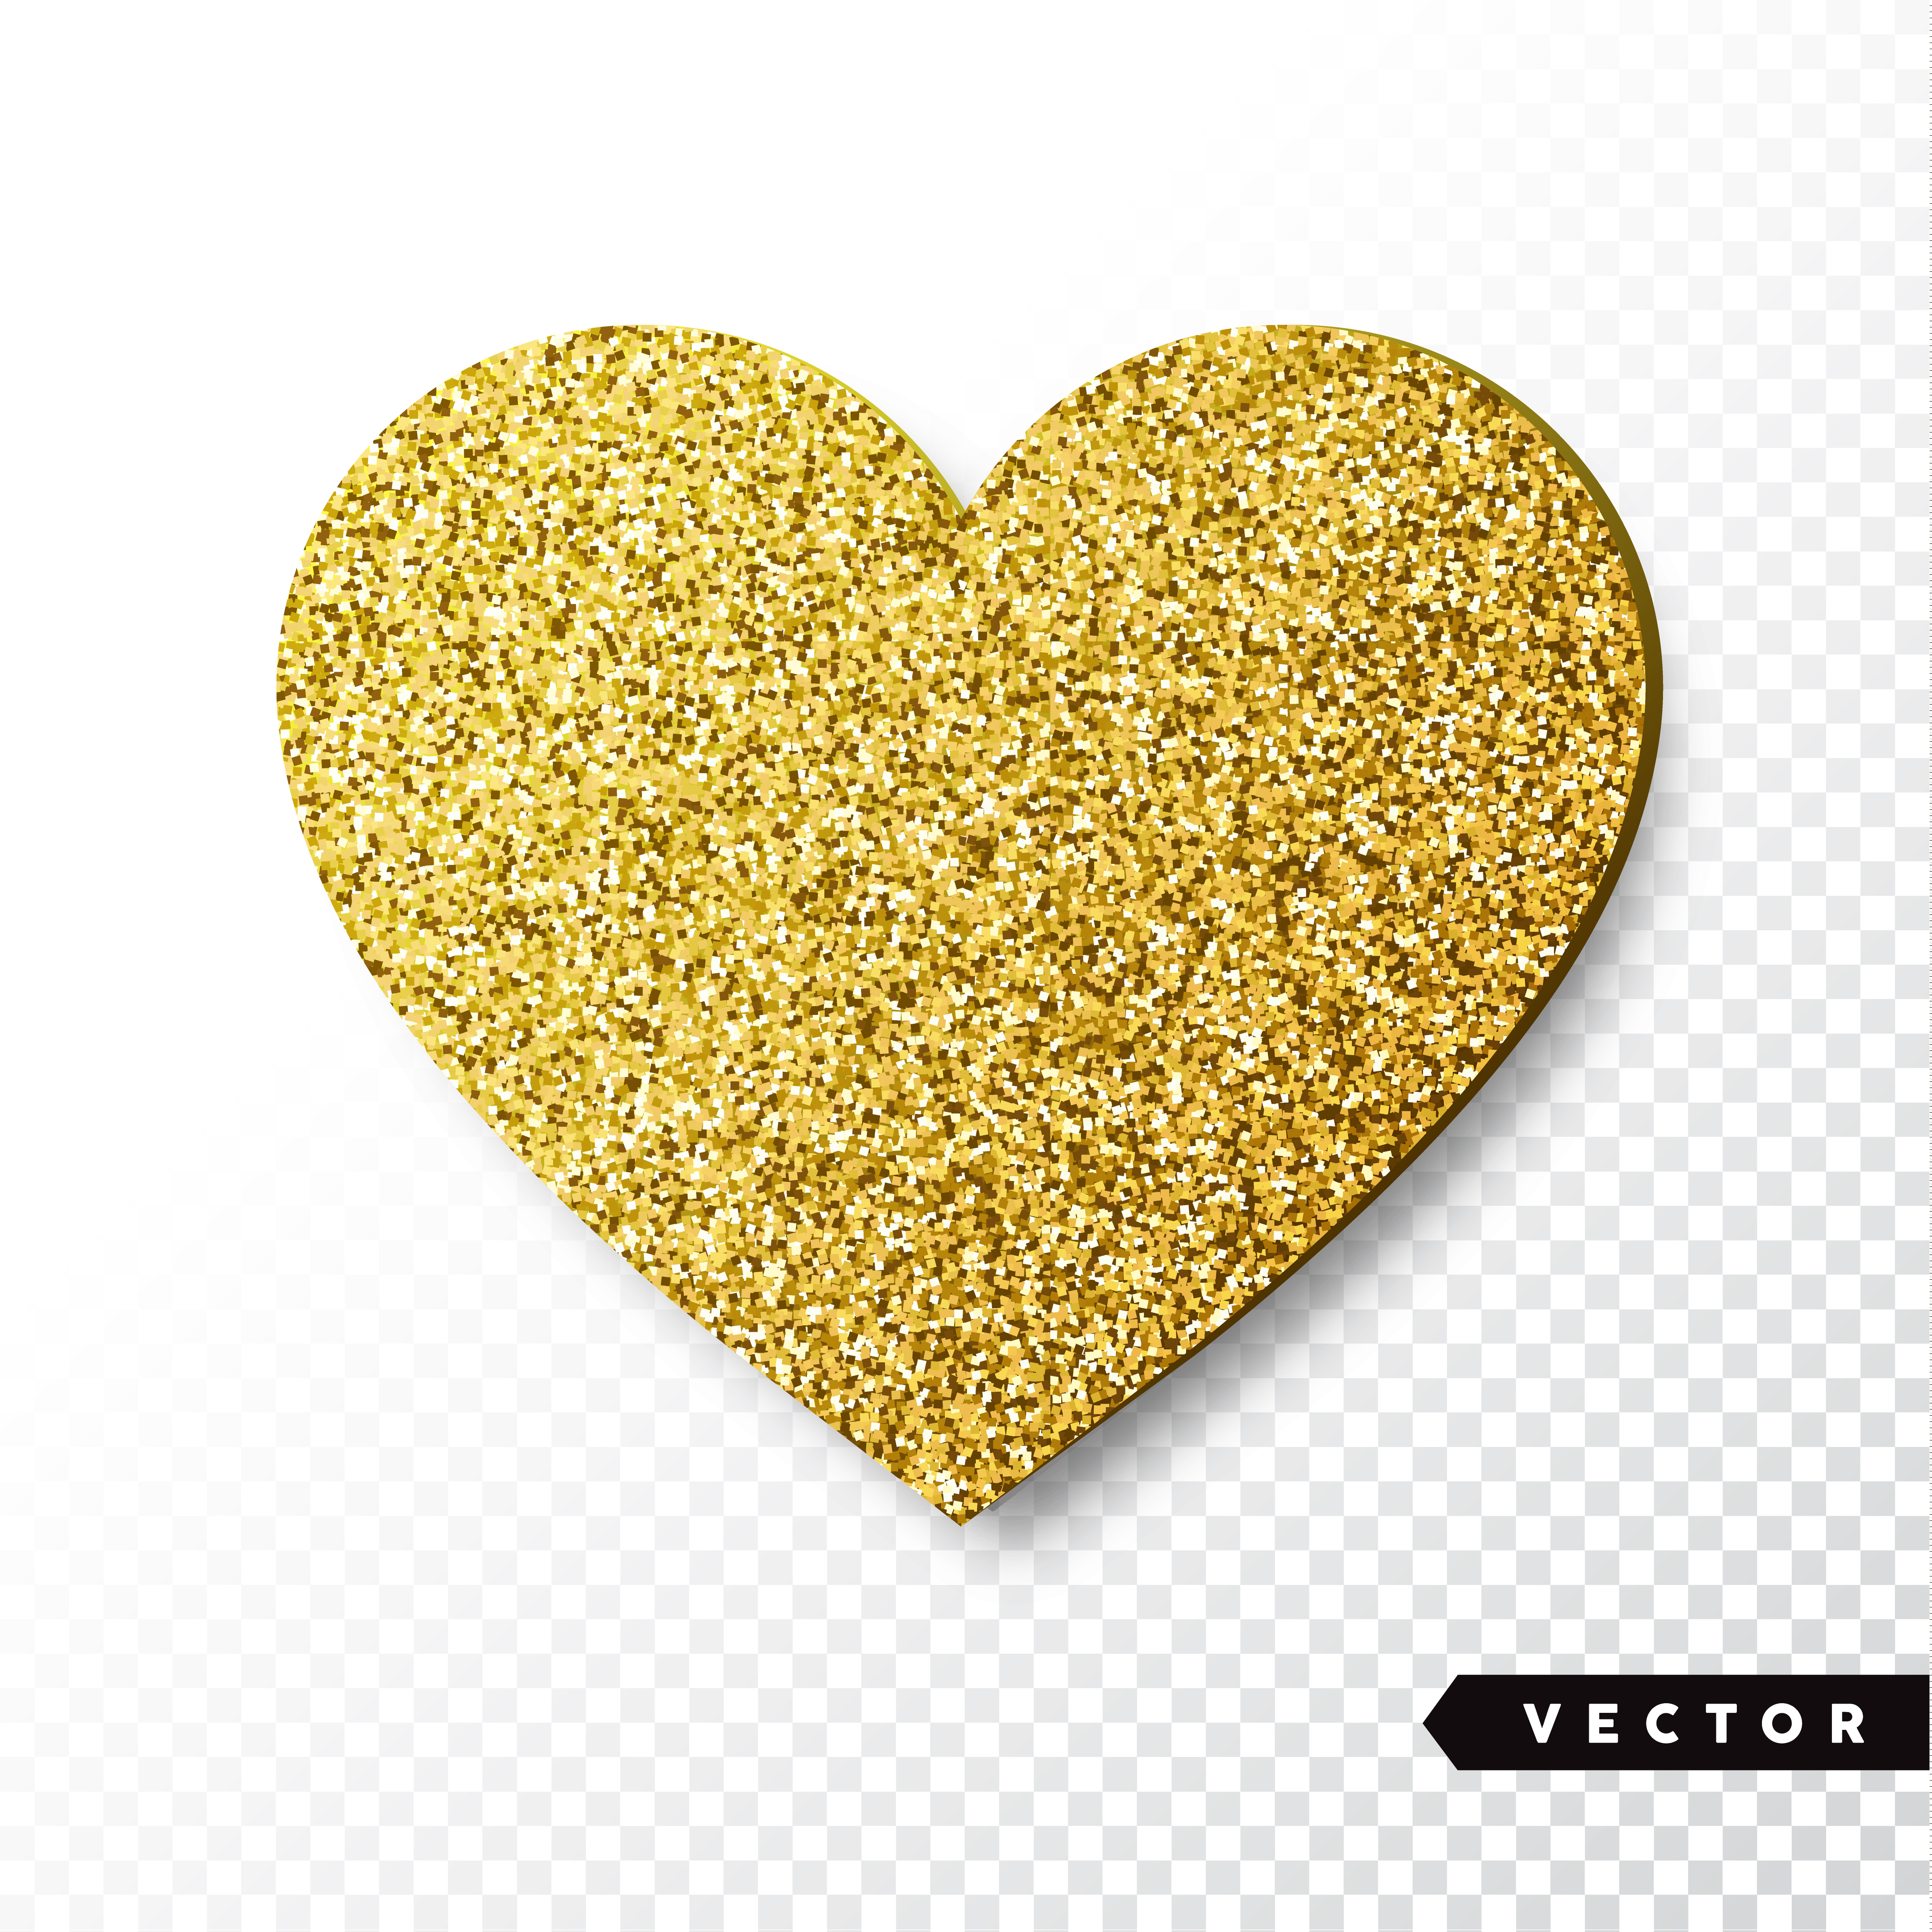 Download Gold Sparkles Heart - Download Free Vectors, Clipart ...